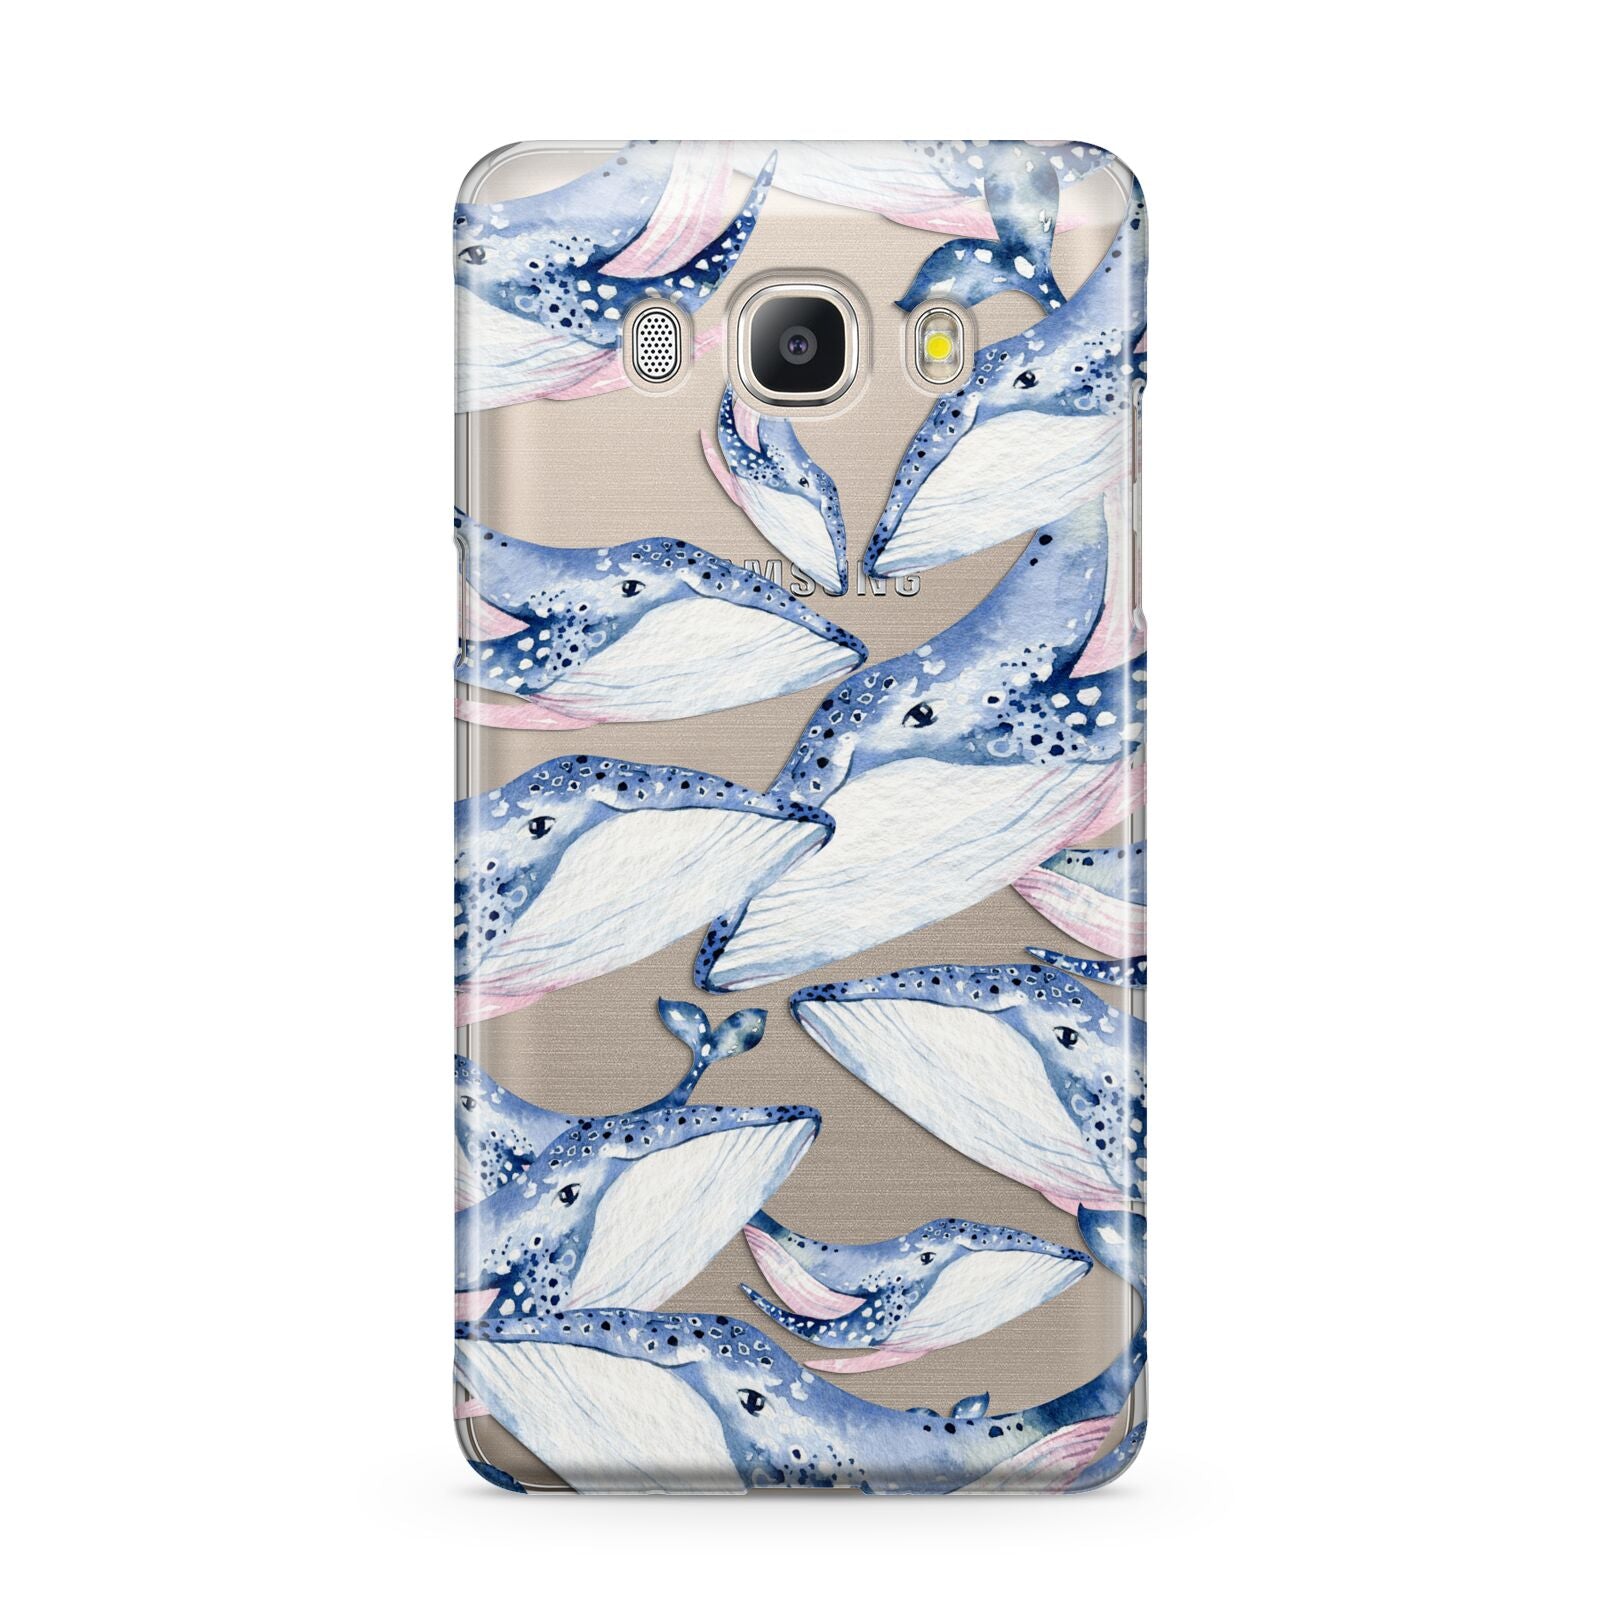 Whale Samsung Galaxy J5 2016 Case